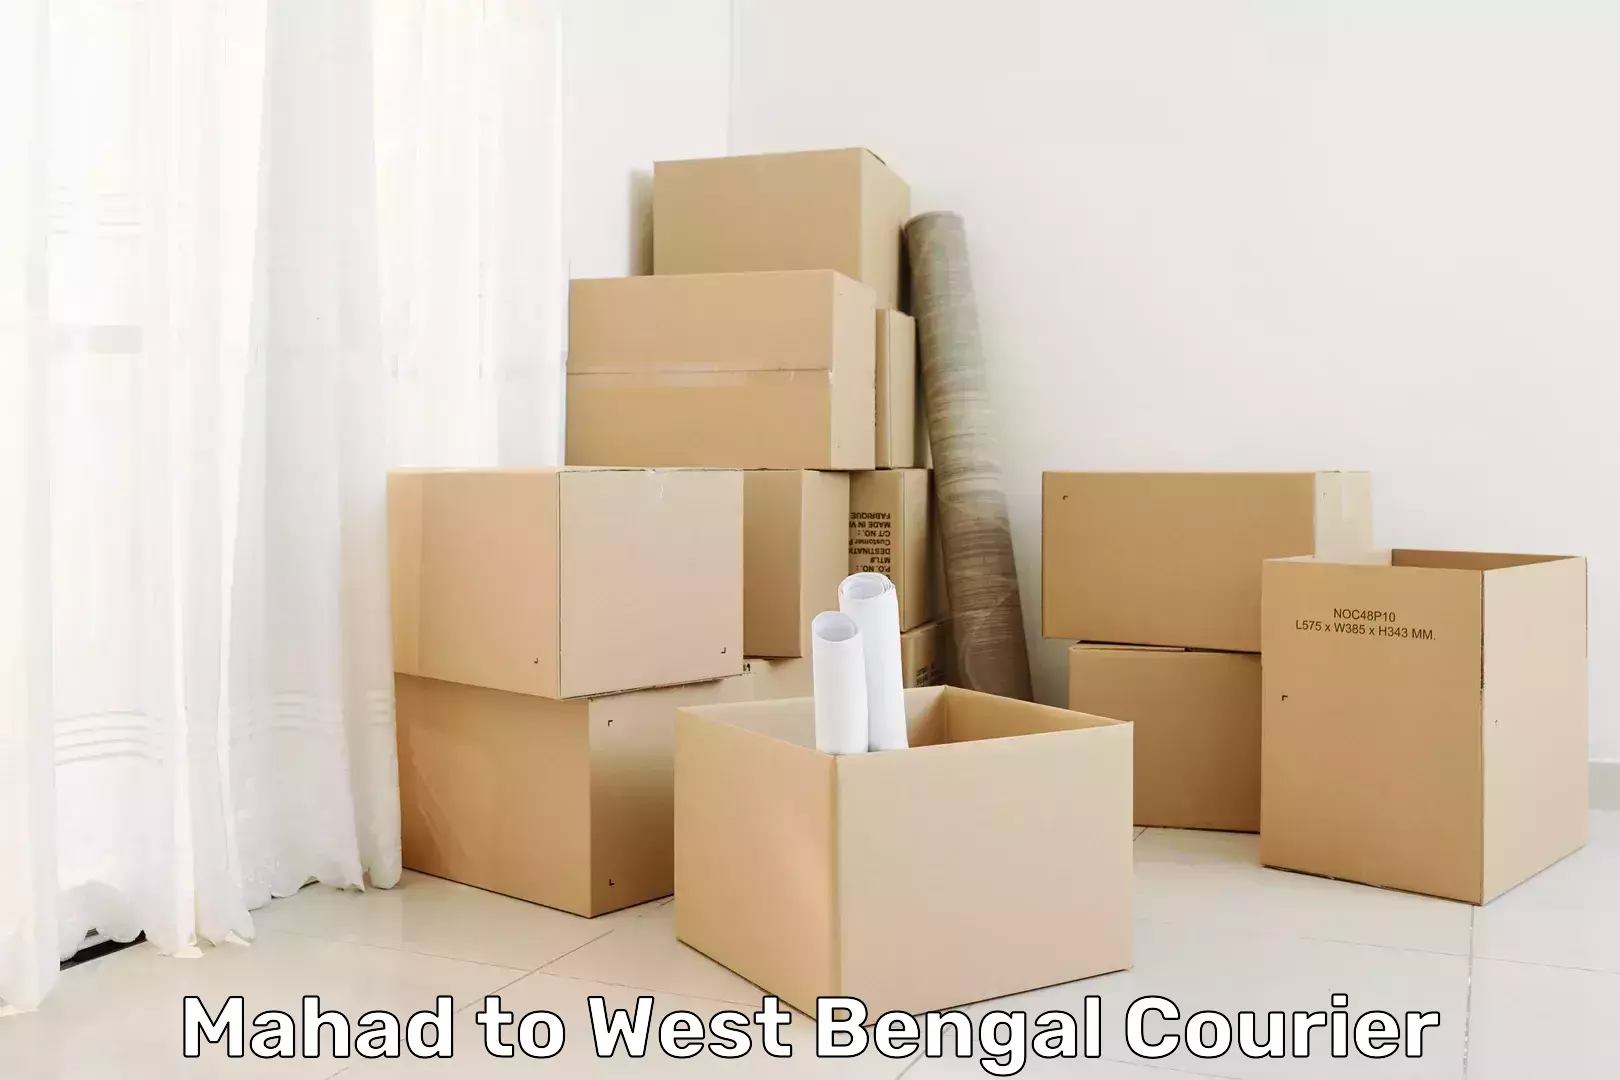 Logistics service provider Mahad to West Bengal